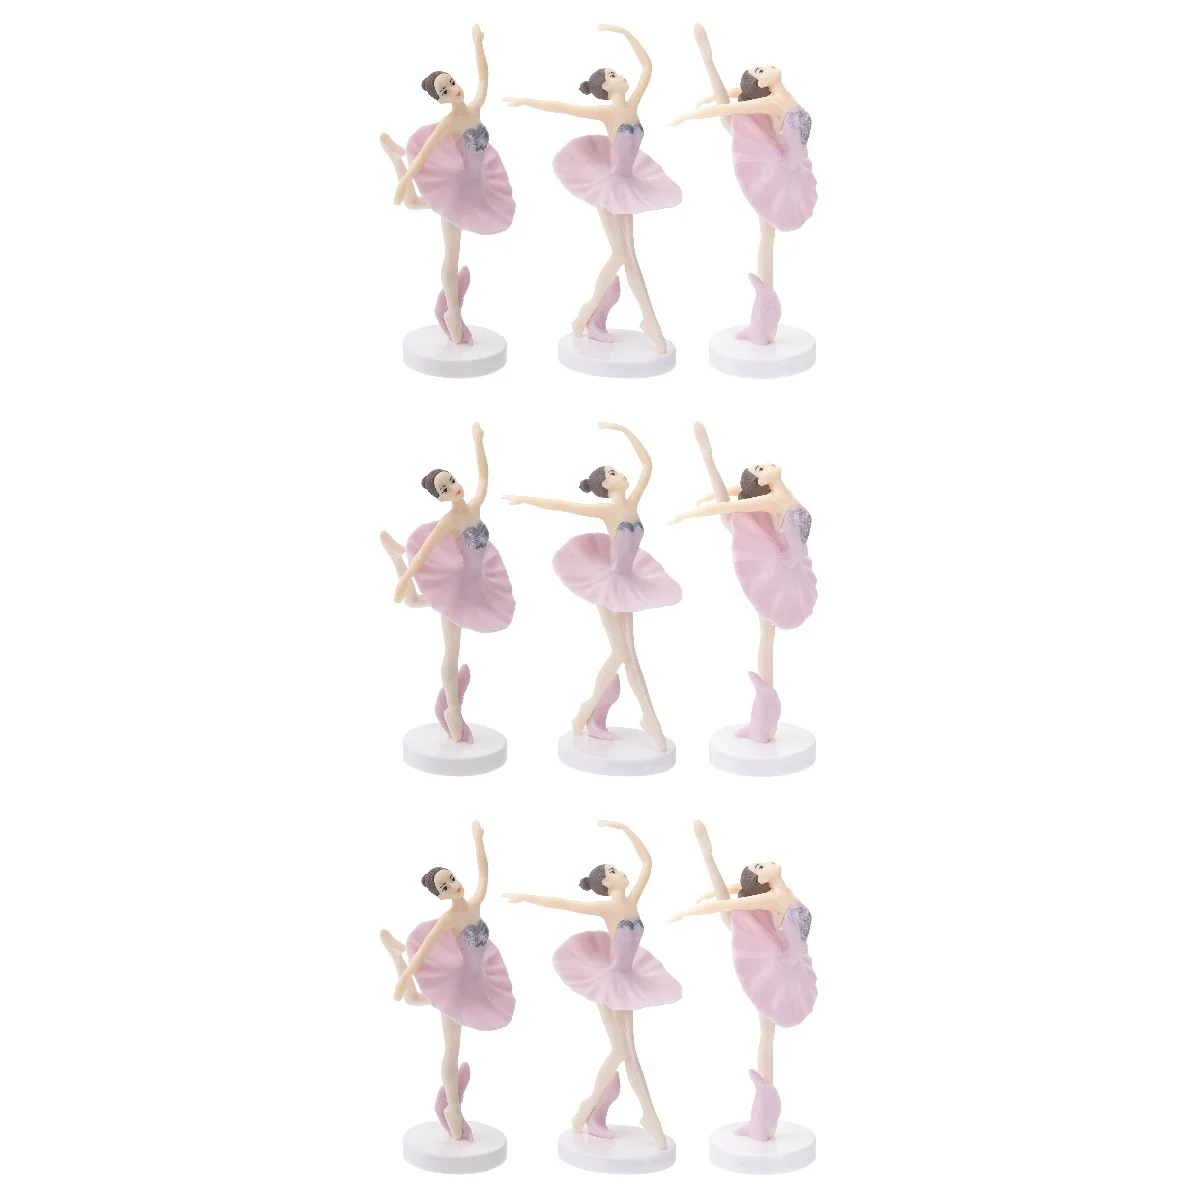 

9 PCS Desk Topper Ballerina Statue Desktop Ornament Plastic Dancing Girl Crafts Figurines for Home Decor (Pink)